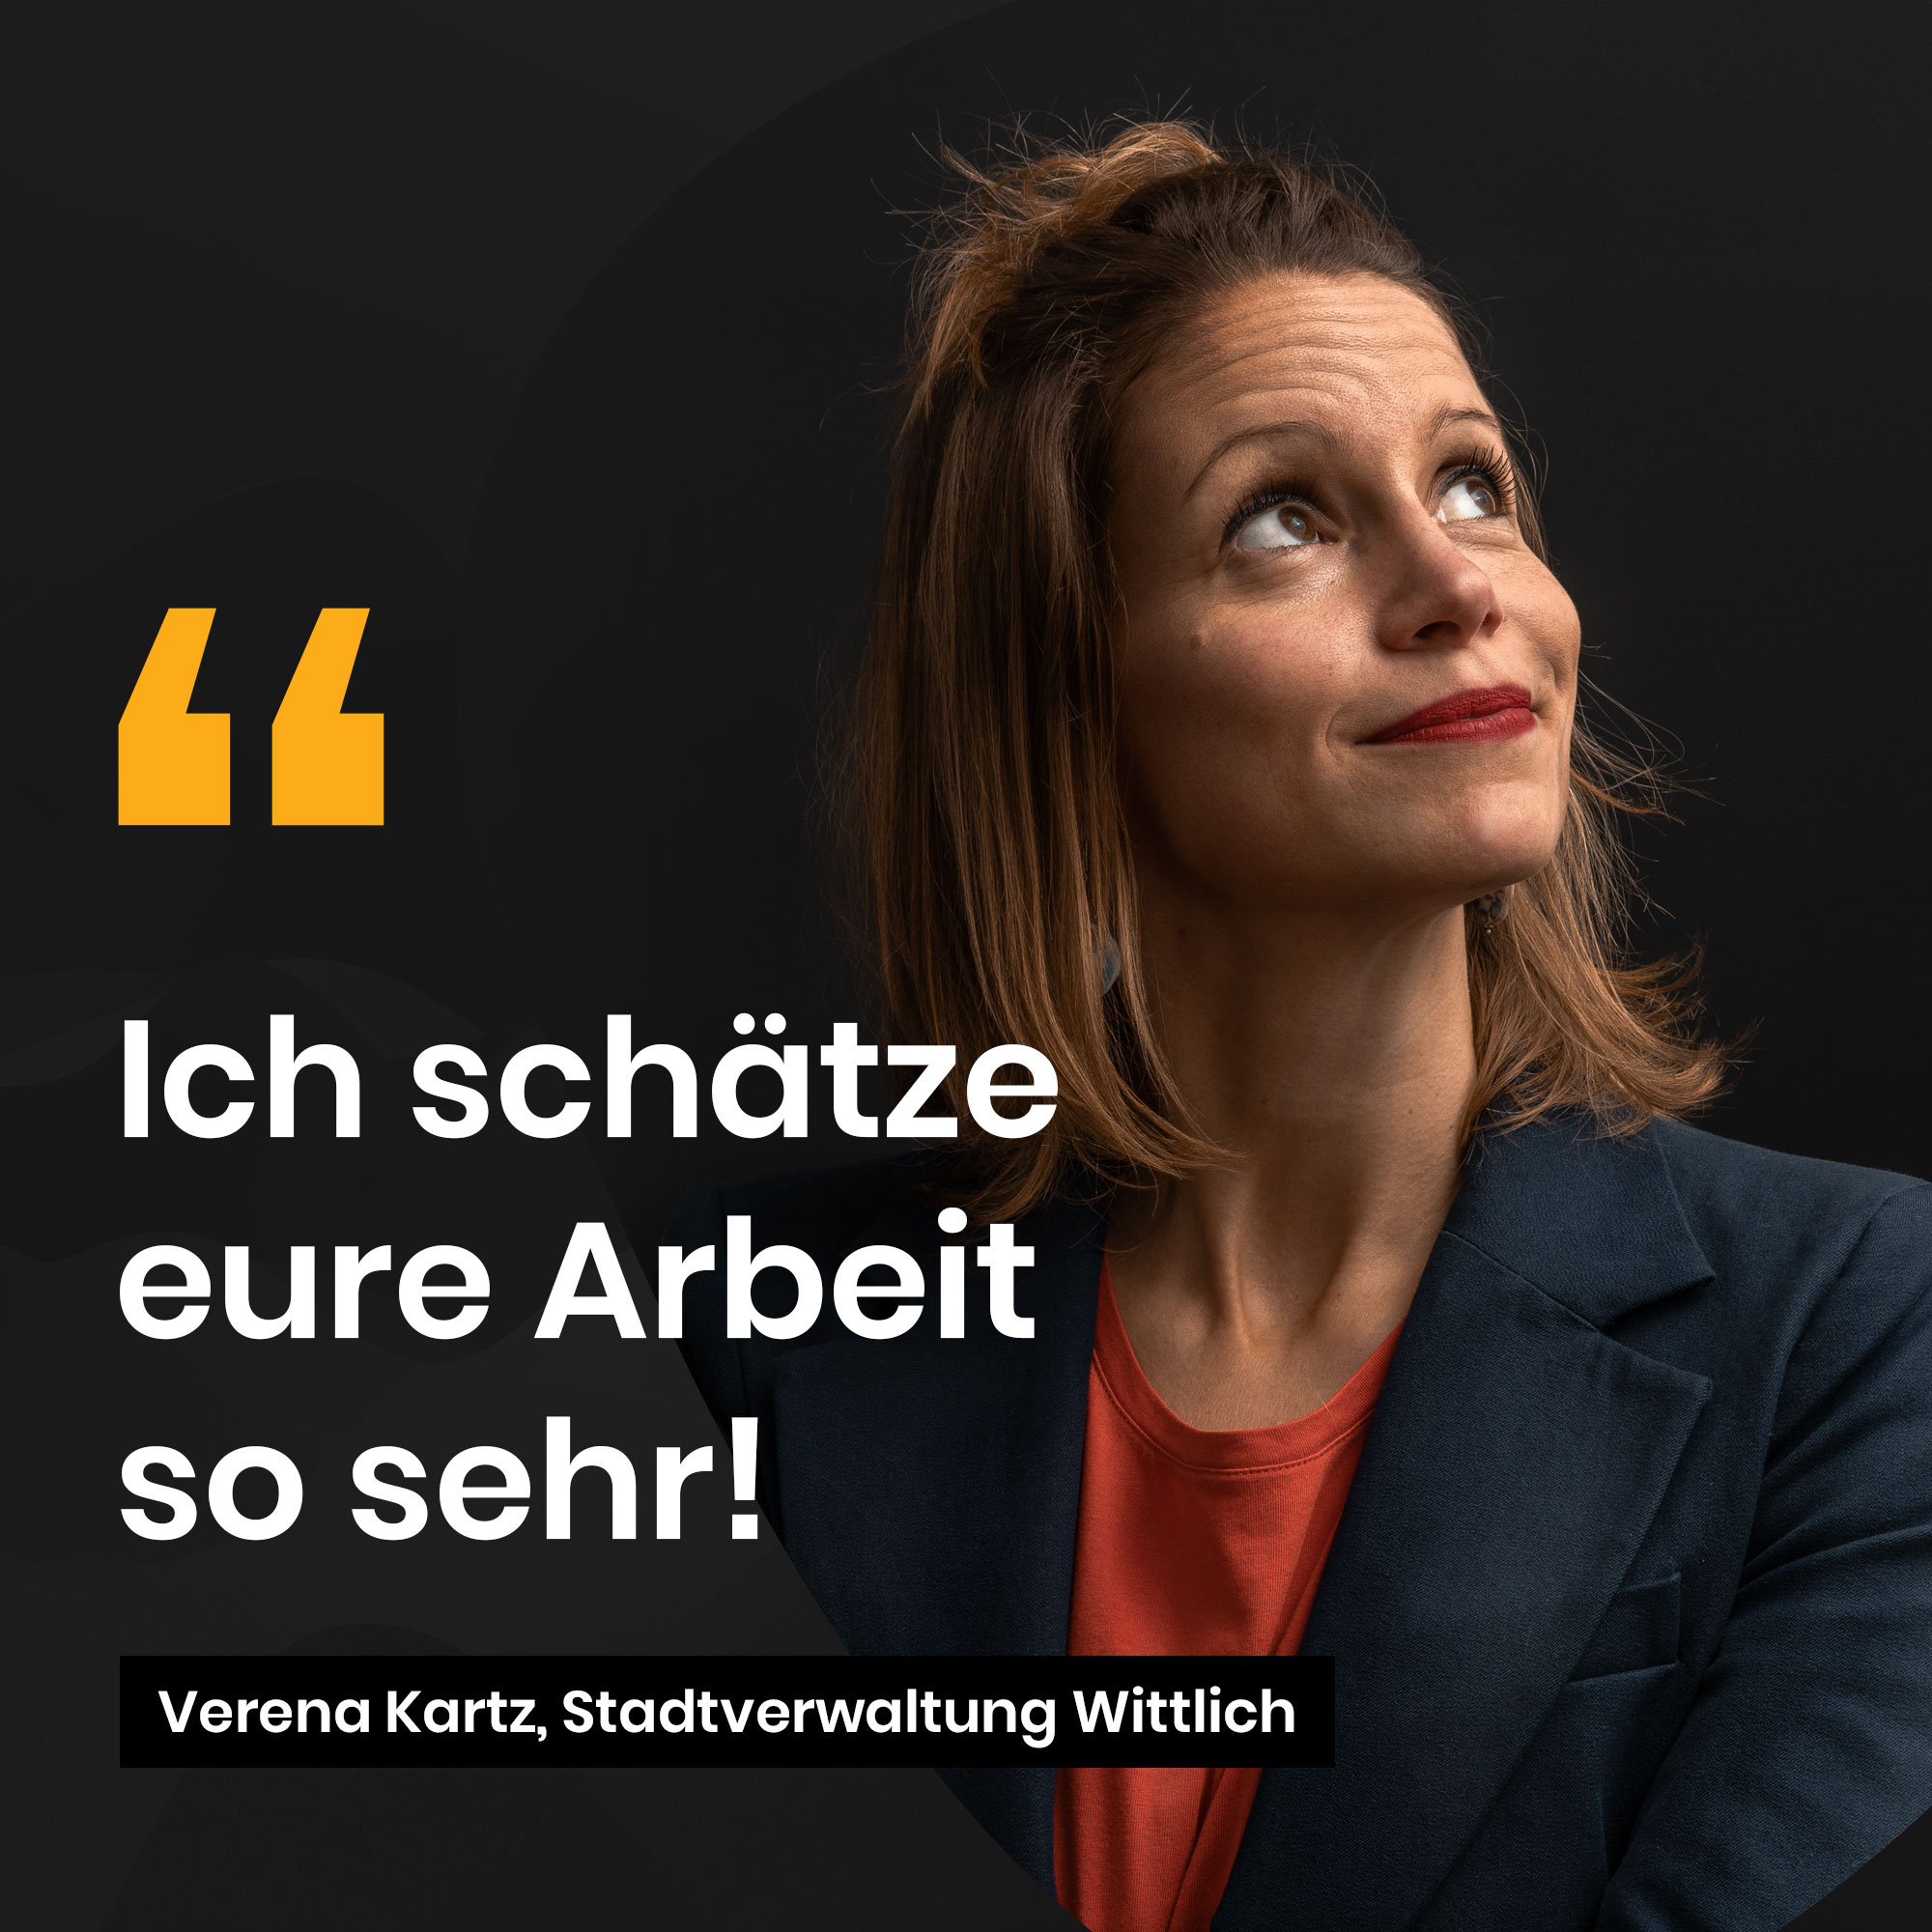 Verena Kartz, Stadtverwaltung Wittlich